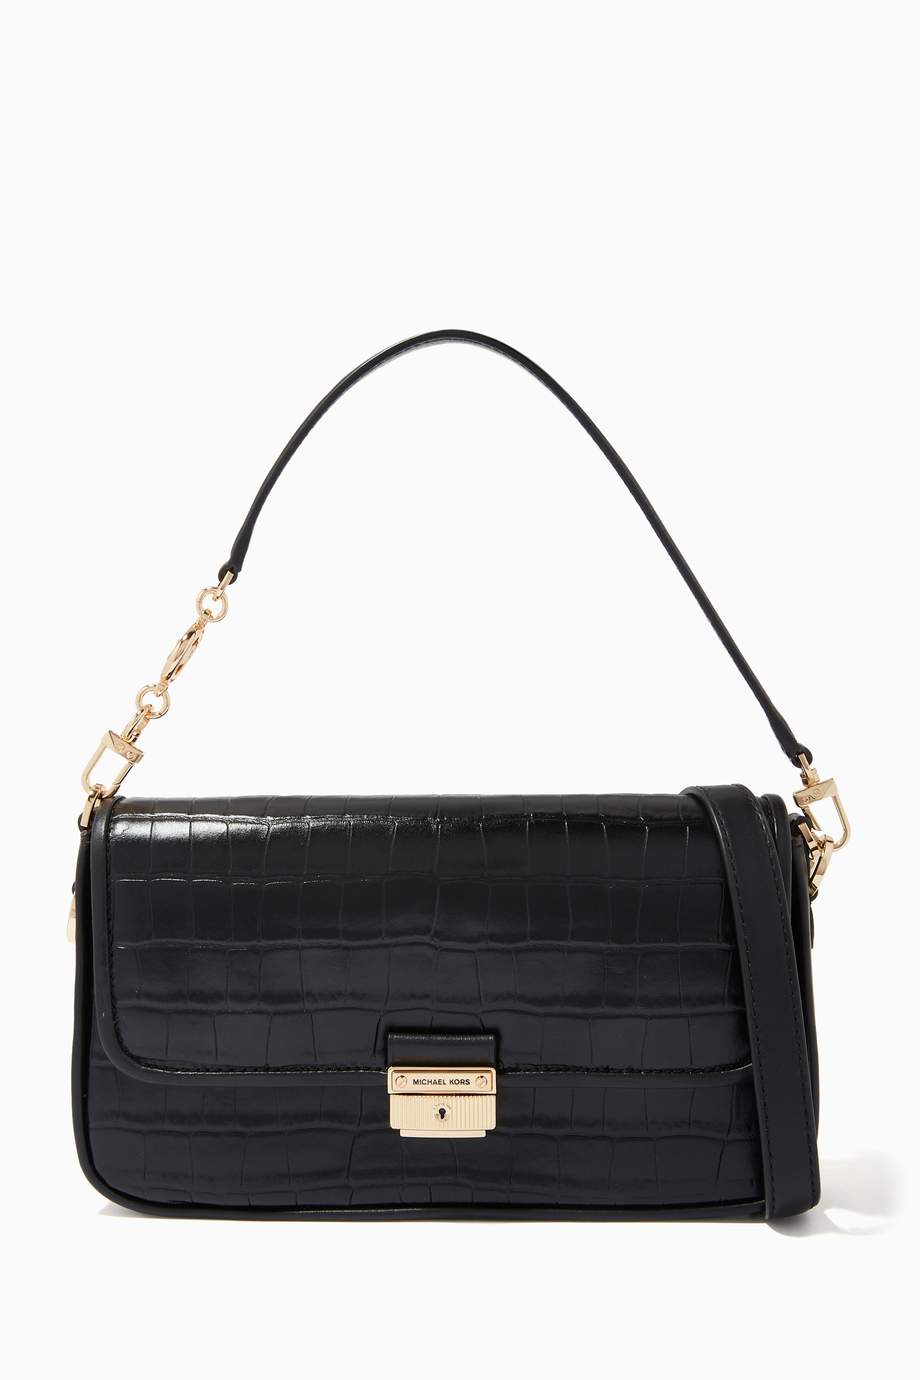 Shop Michael Kors Black Small Bradshaw Shoulder Bag in Croc-embossed Leather for Women | Ounass UAE